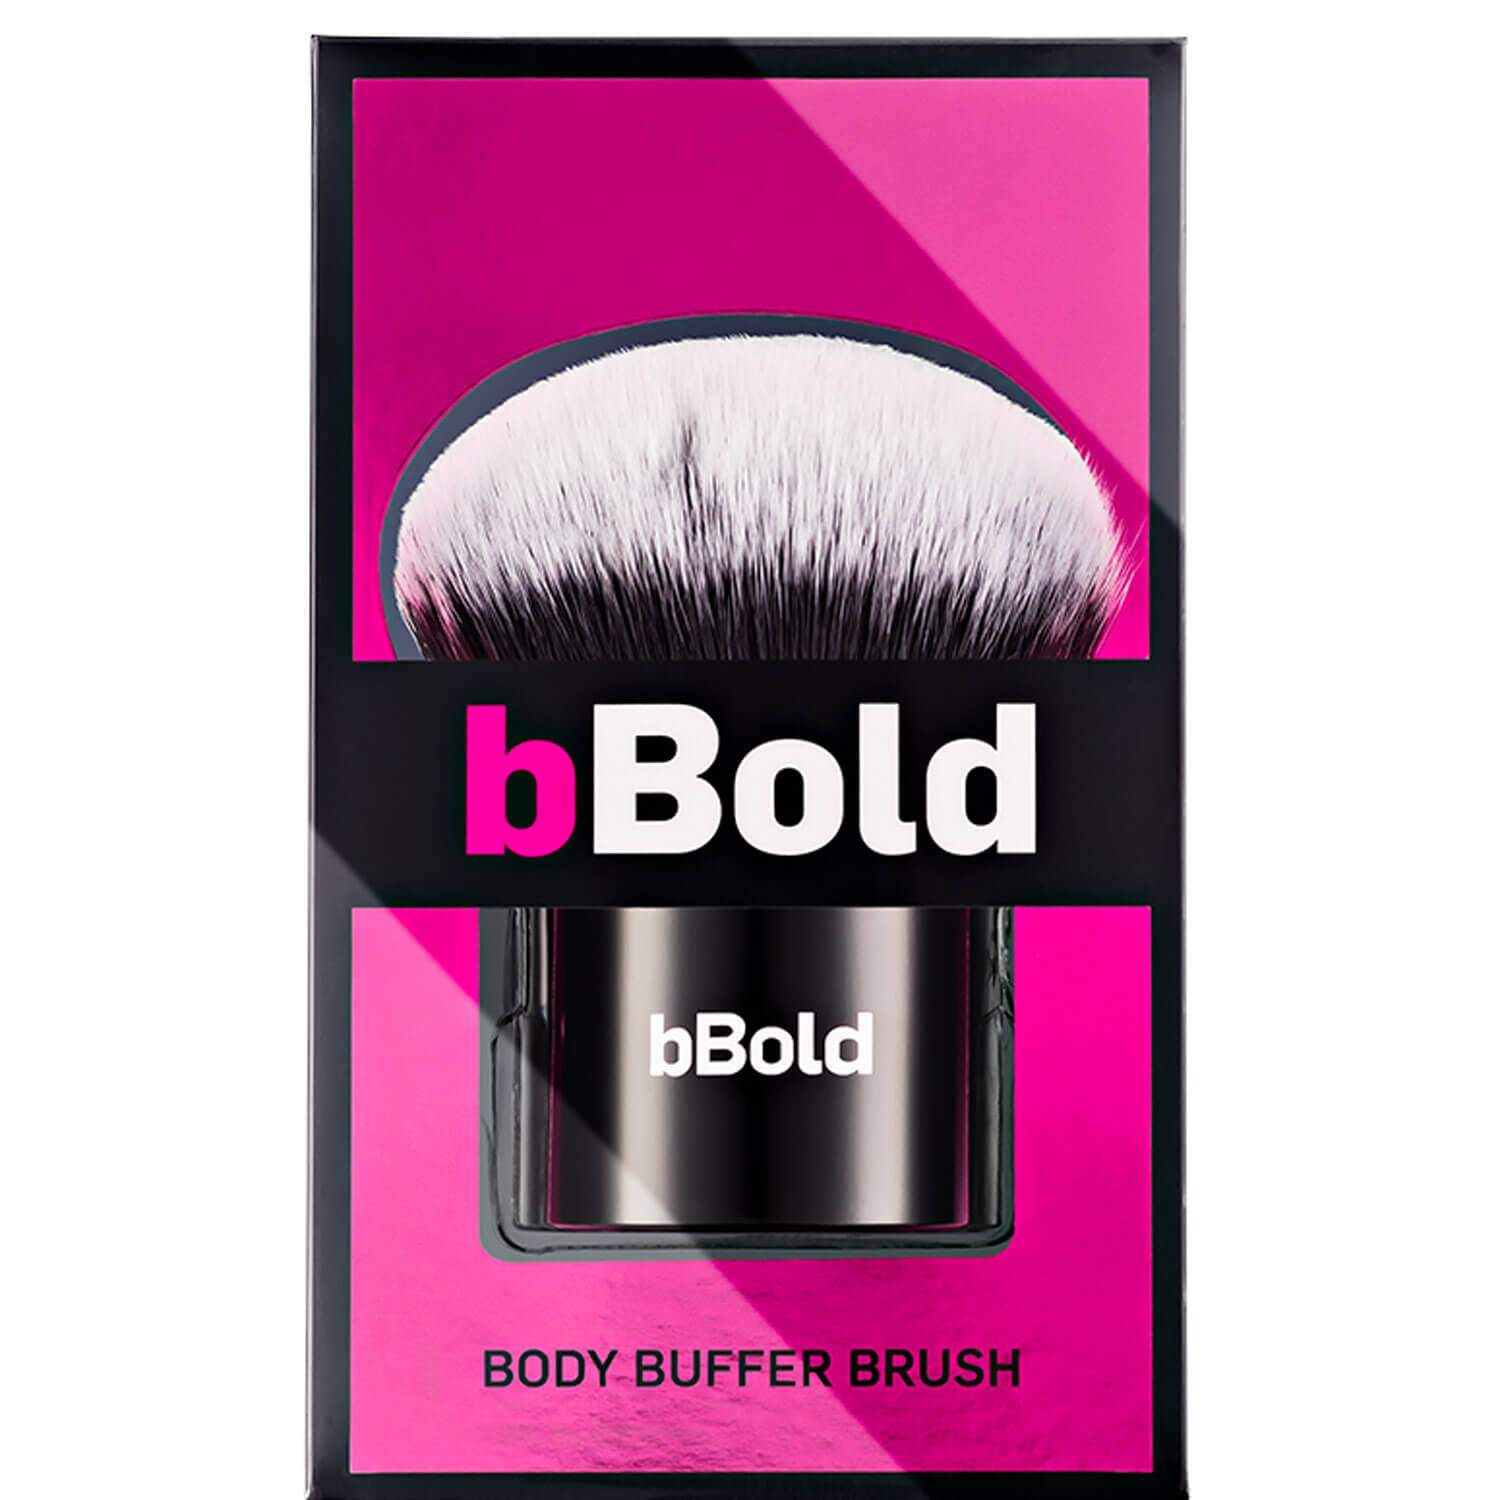 Bbold Body Buffer Brush